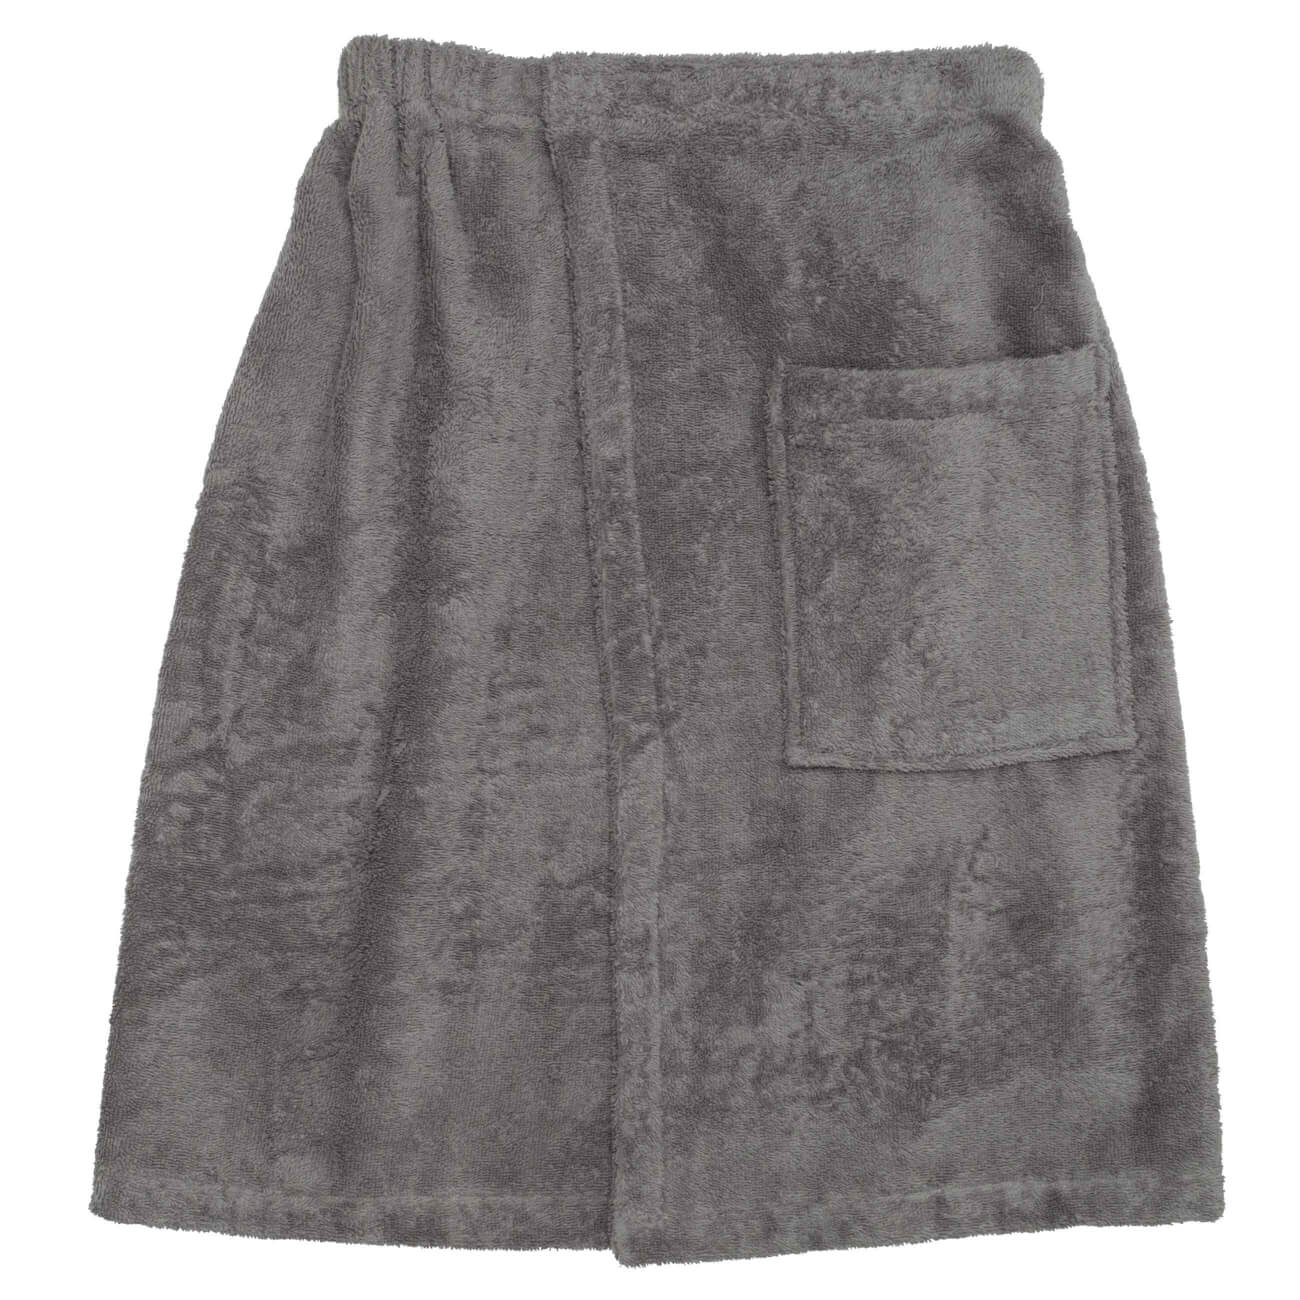 Полотенце-килт мужское, 70х160 см, на липучке, хлопок, темно-серое, Spa towel полотенце вечер бейлиз р 40х70